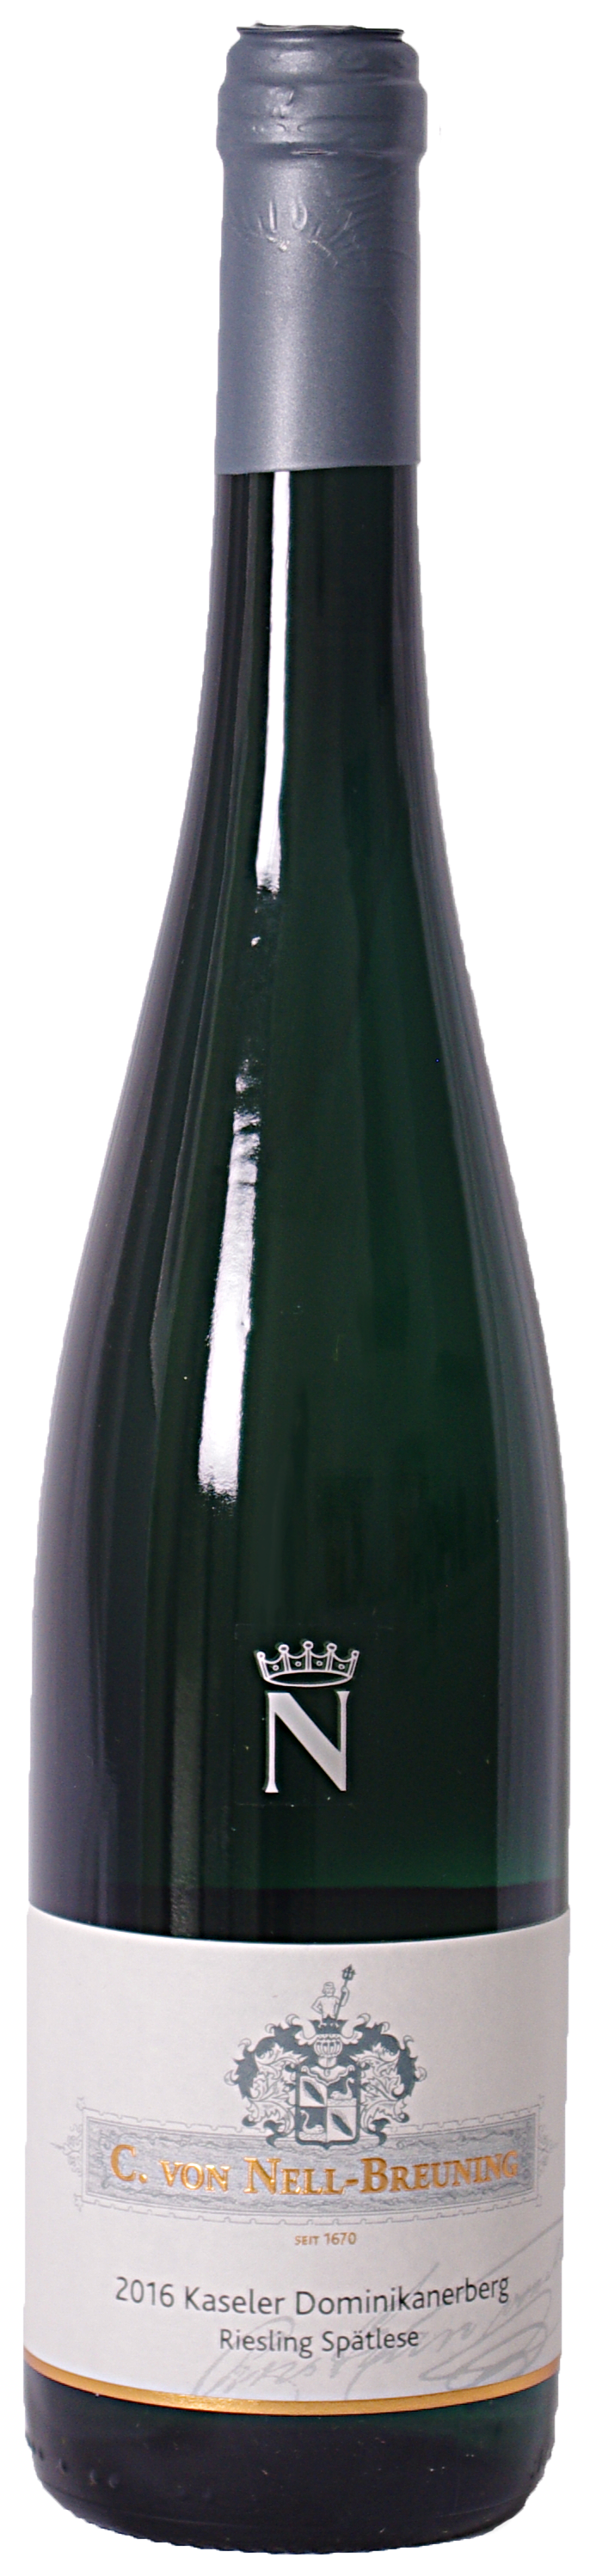 Weingut C. von Nell-Breuning Kaseler Dominikanerberg (Monopole) Riesling Spatlese Trocken 2016 (Dry Style)